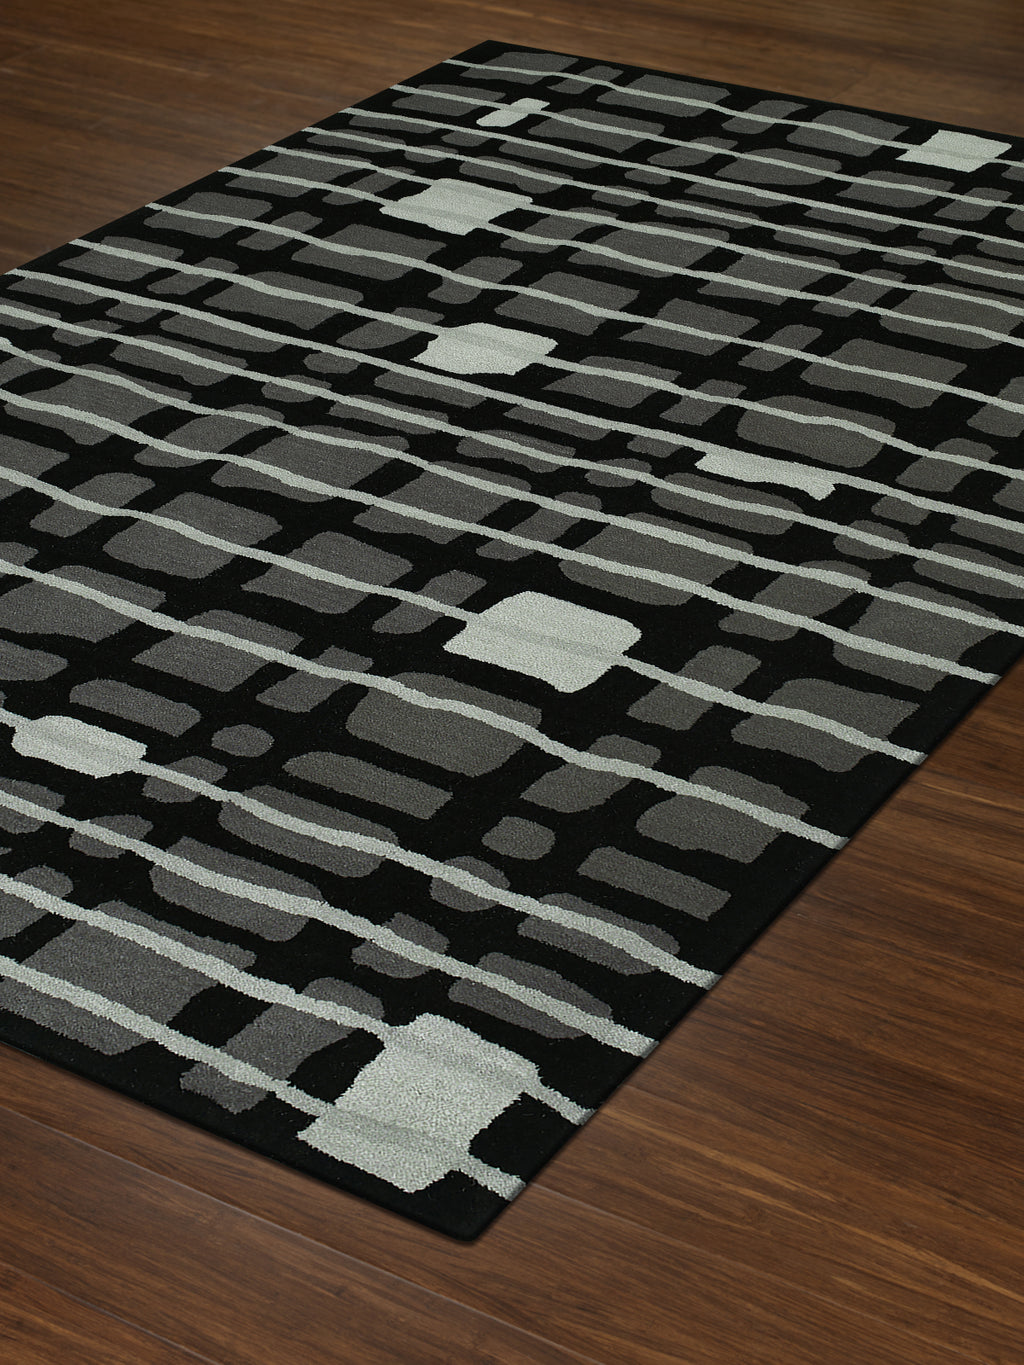 Dalyn Santino SO40 BLACK Area Rug Floor Image Feature